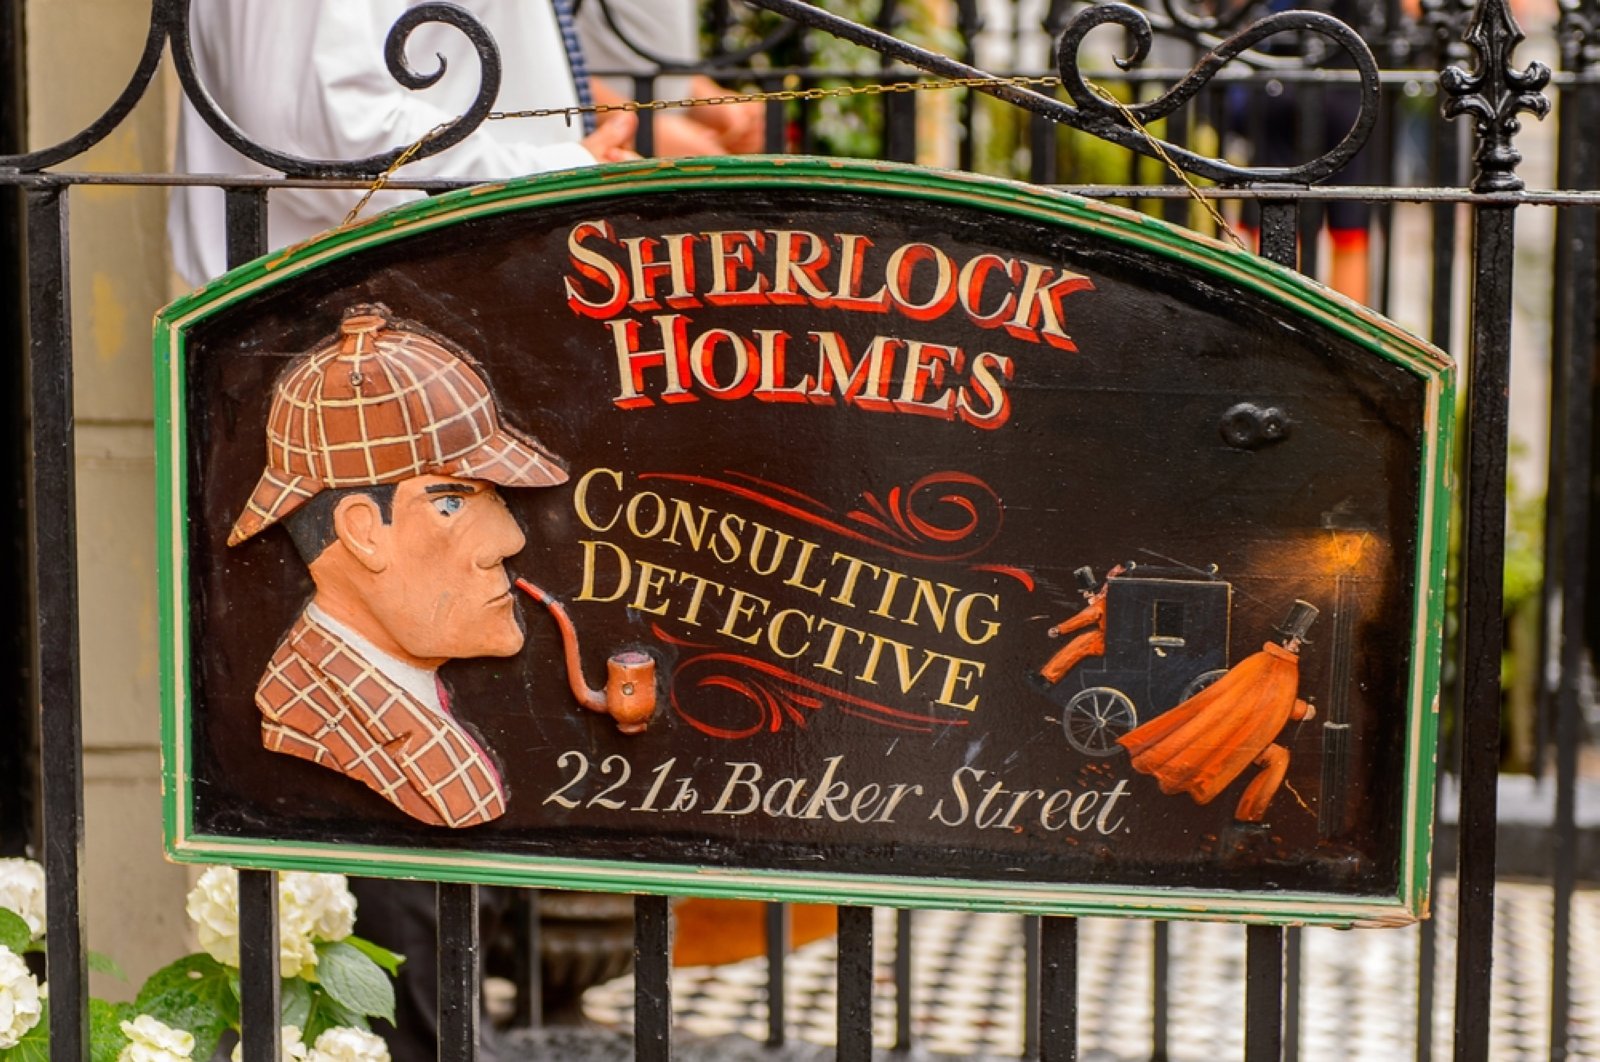 Last Sherlock Holmes work becomes public domain in 2023